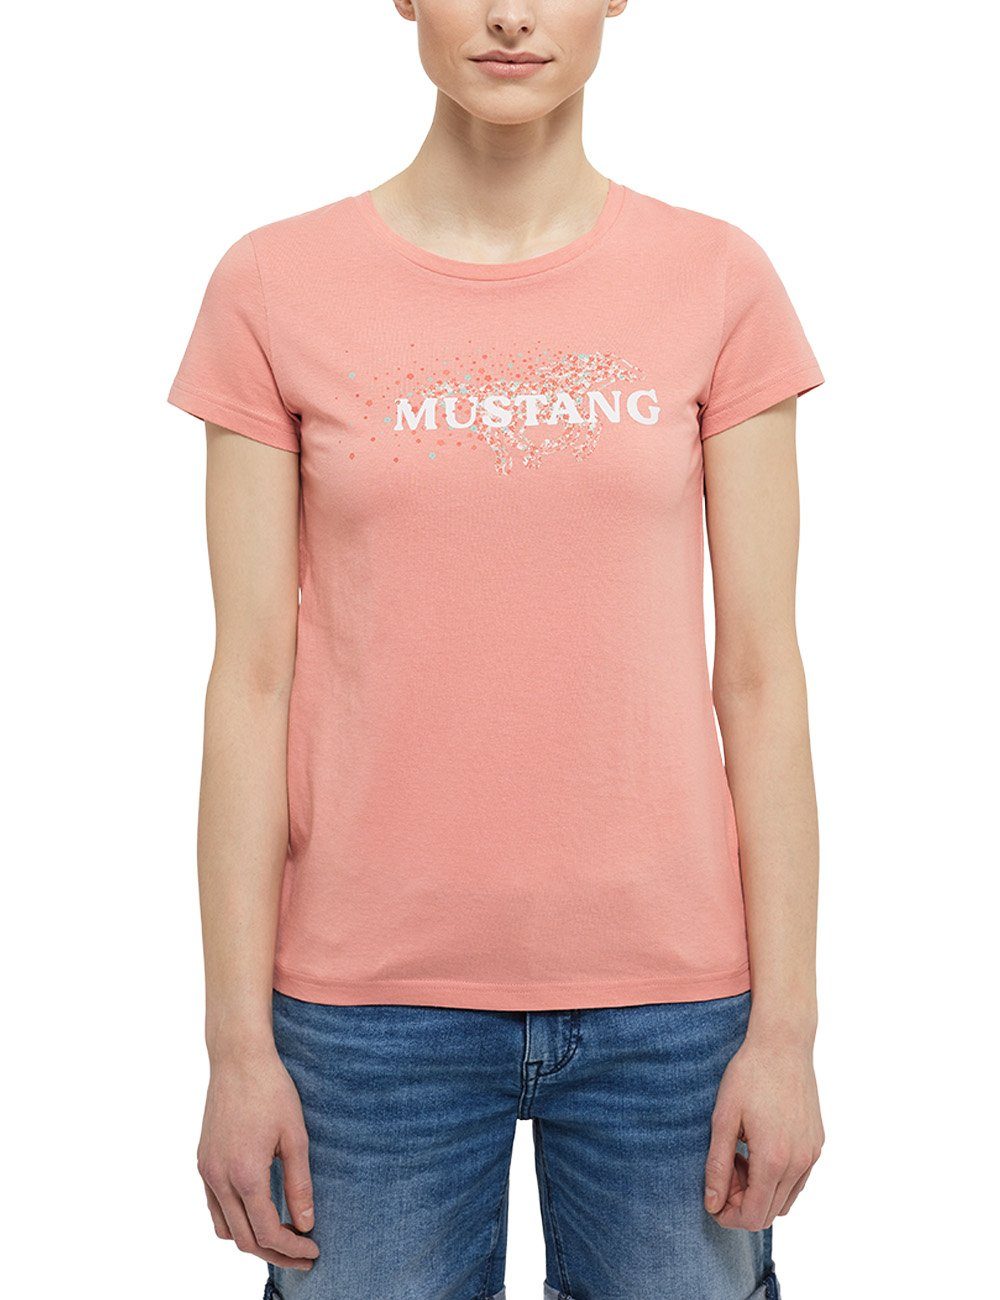 MUSTANG T-Shirt Passform Print, Leicht C taillierte Alexia